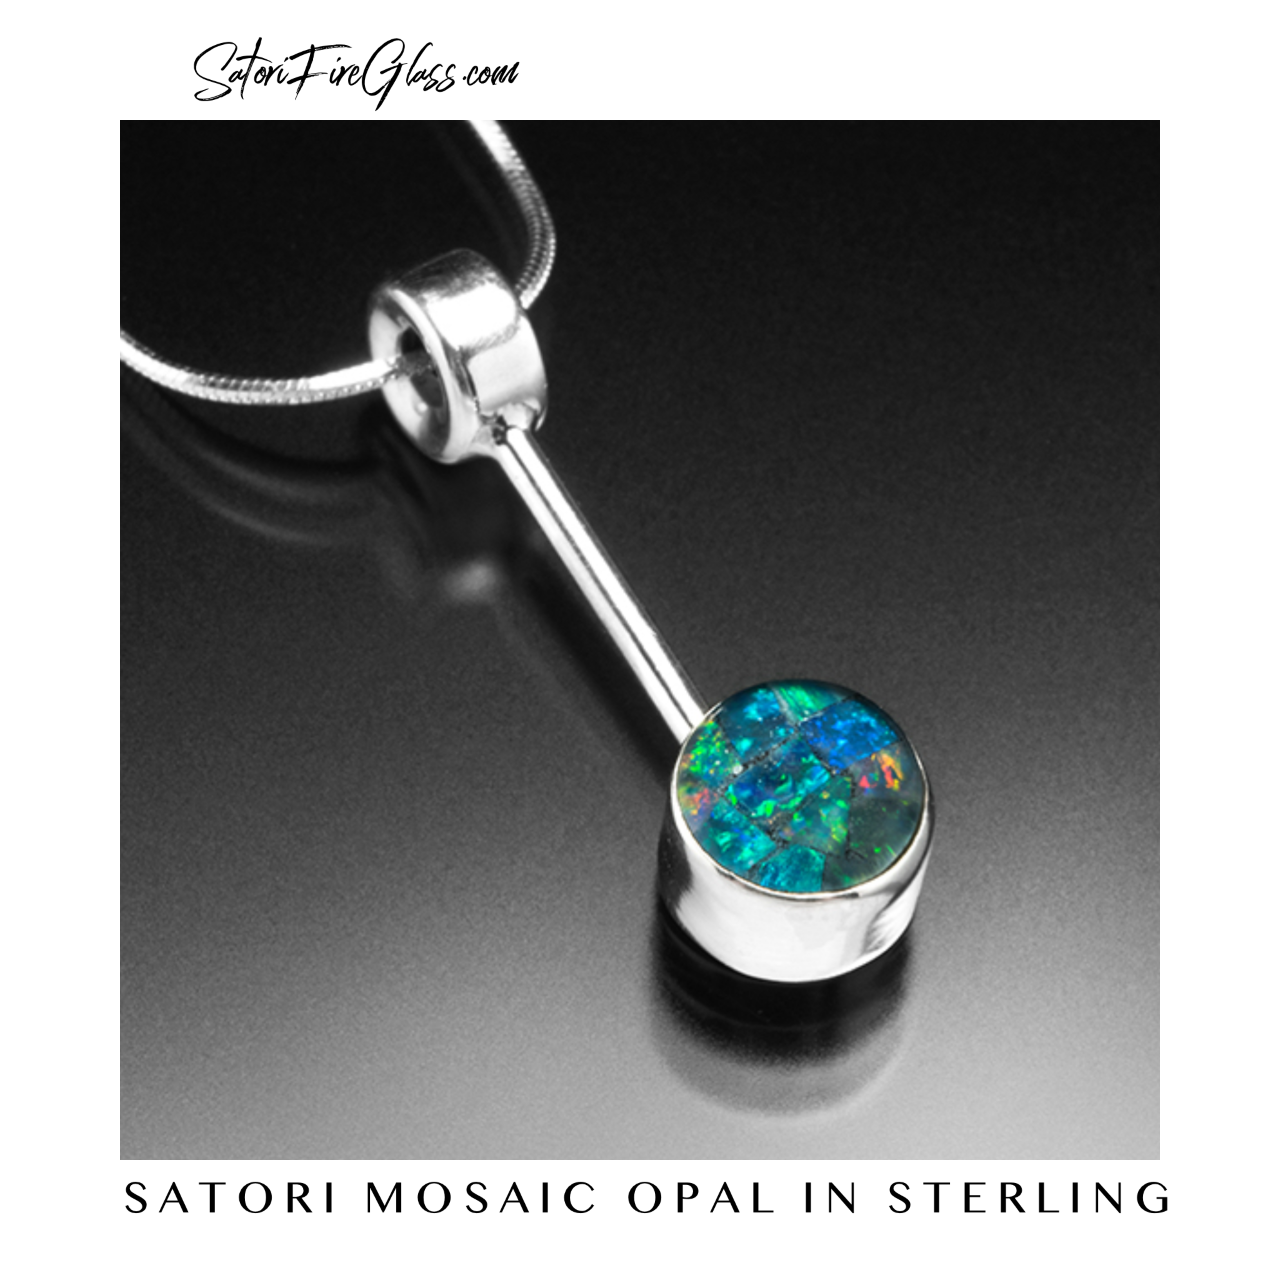 Satori Mosaic Opal in Sterling